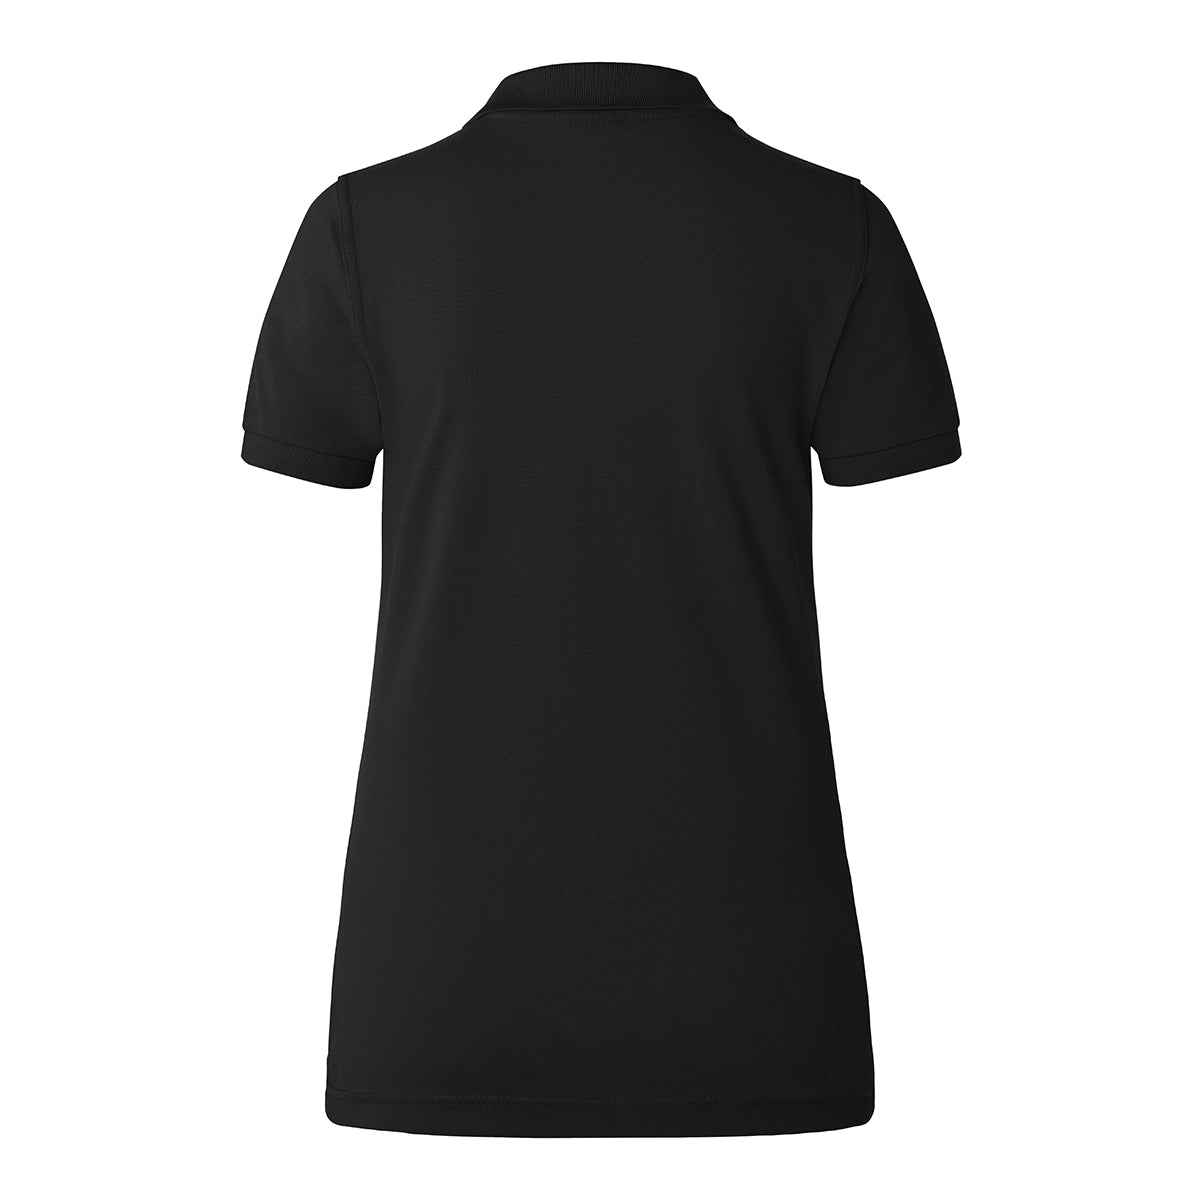 (6 stk) Karlowsky - Workwear Polo Shirt Basic til Damer - Sort - Størrelse: XL